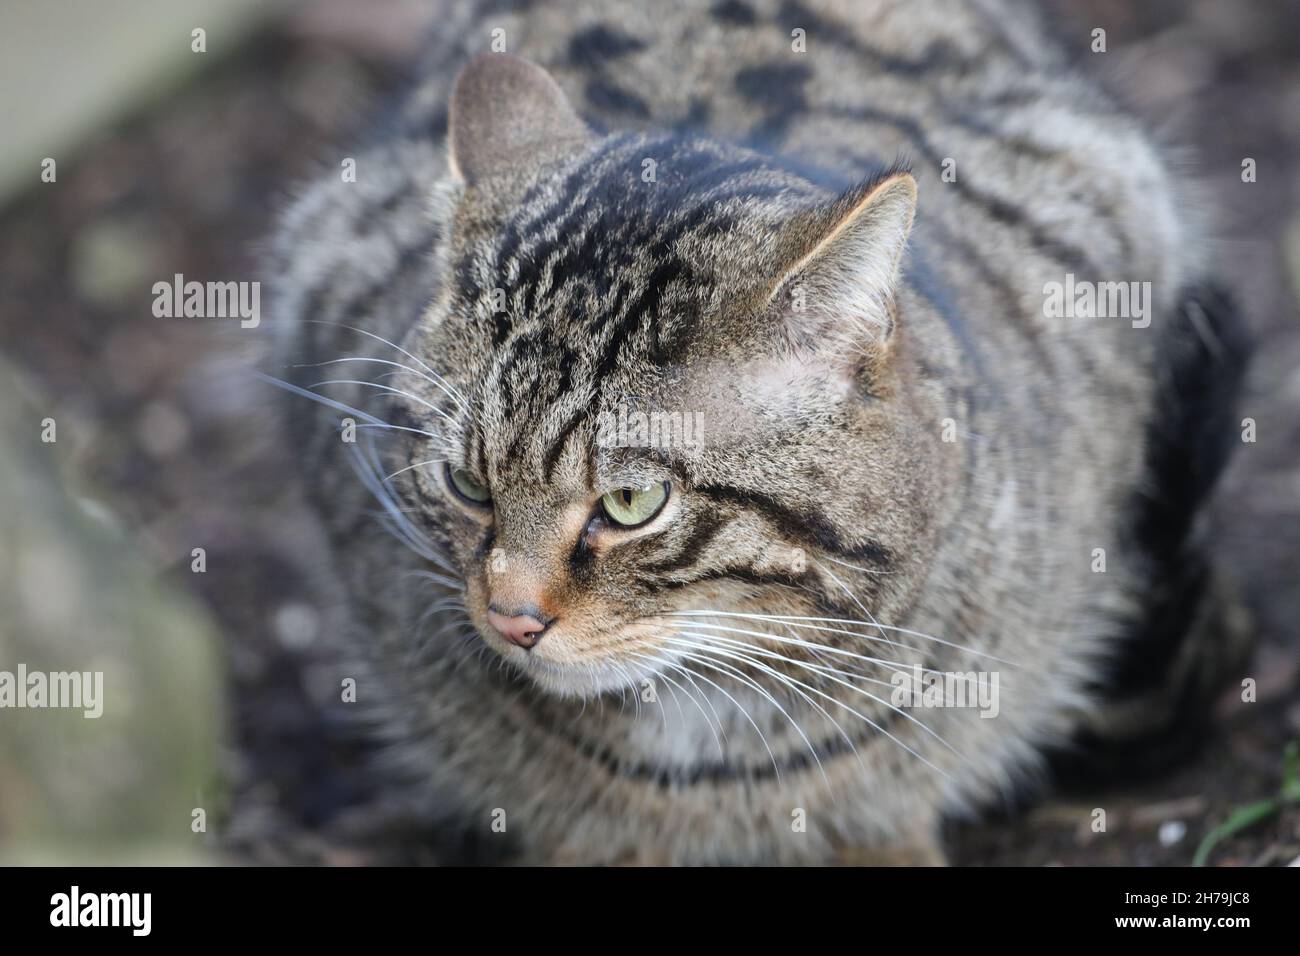 Scottish Wild Cat (Felis sylvestris). Avoiding eye contact. Head, facial features, rounded black tipped tail. Near, symmetrical dark striped markings. Stock Photo